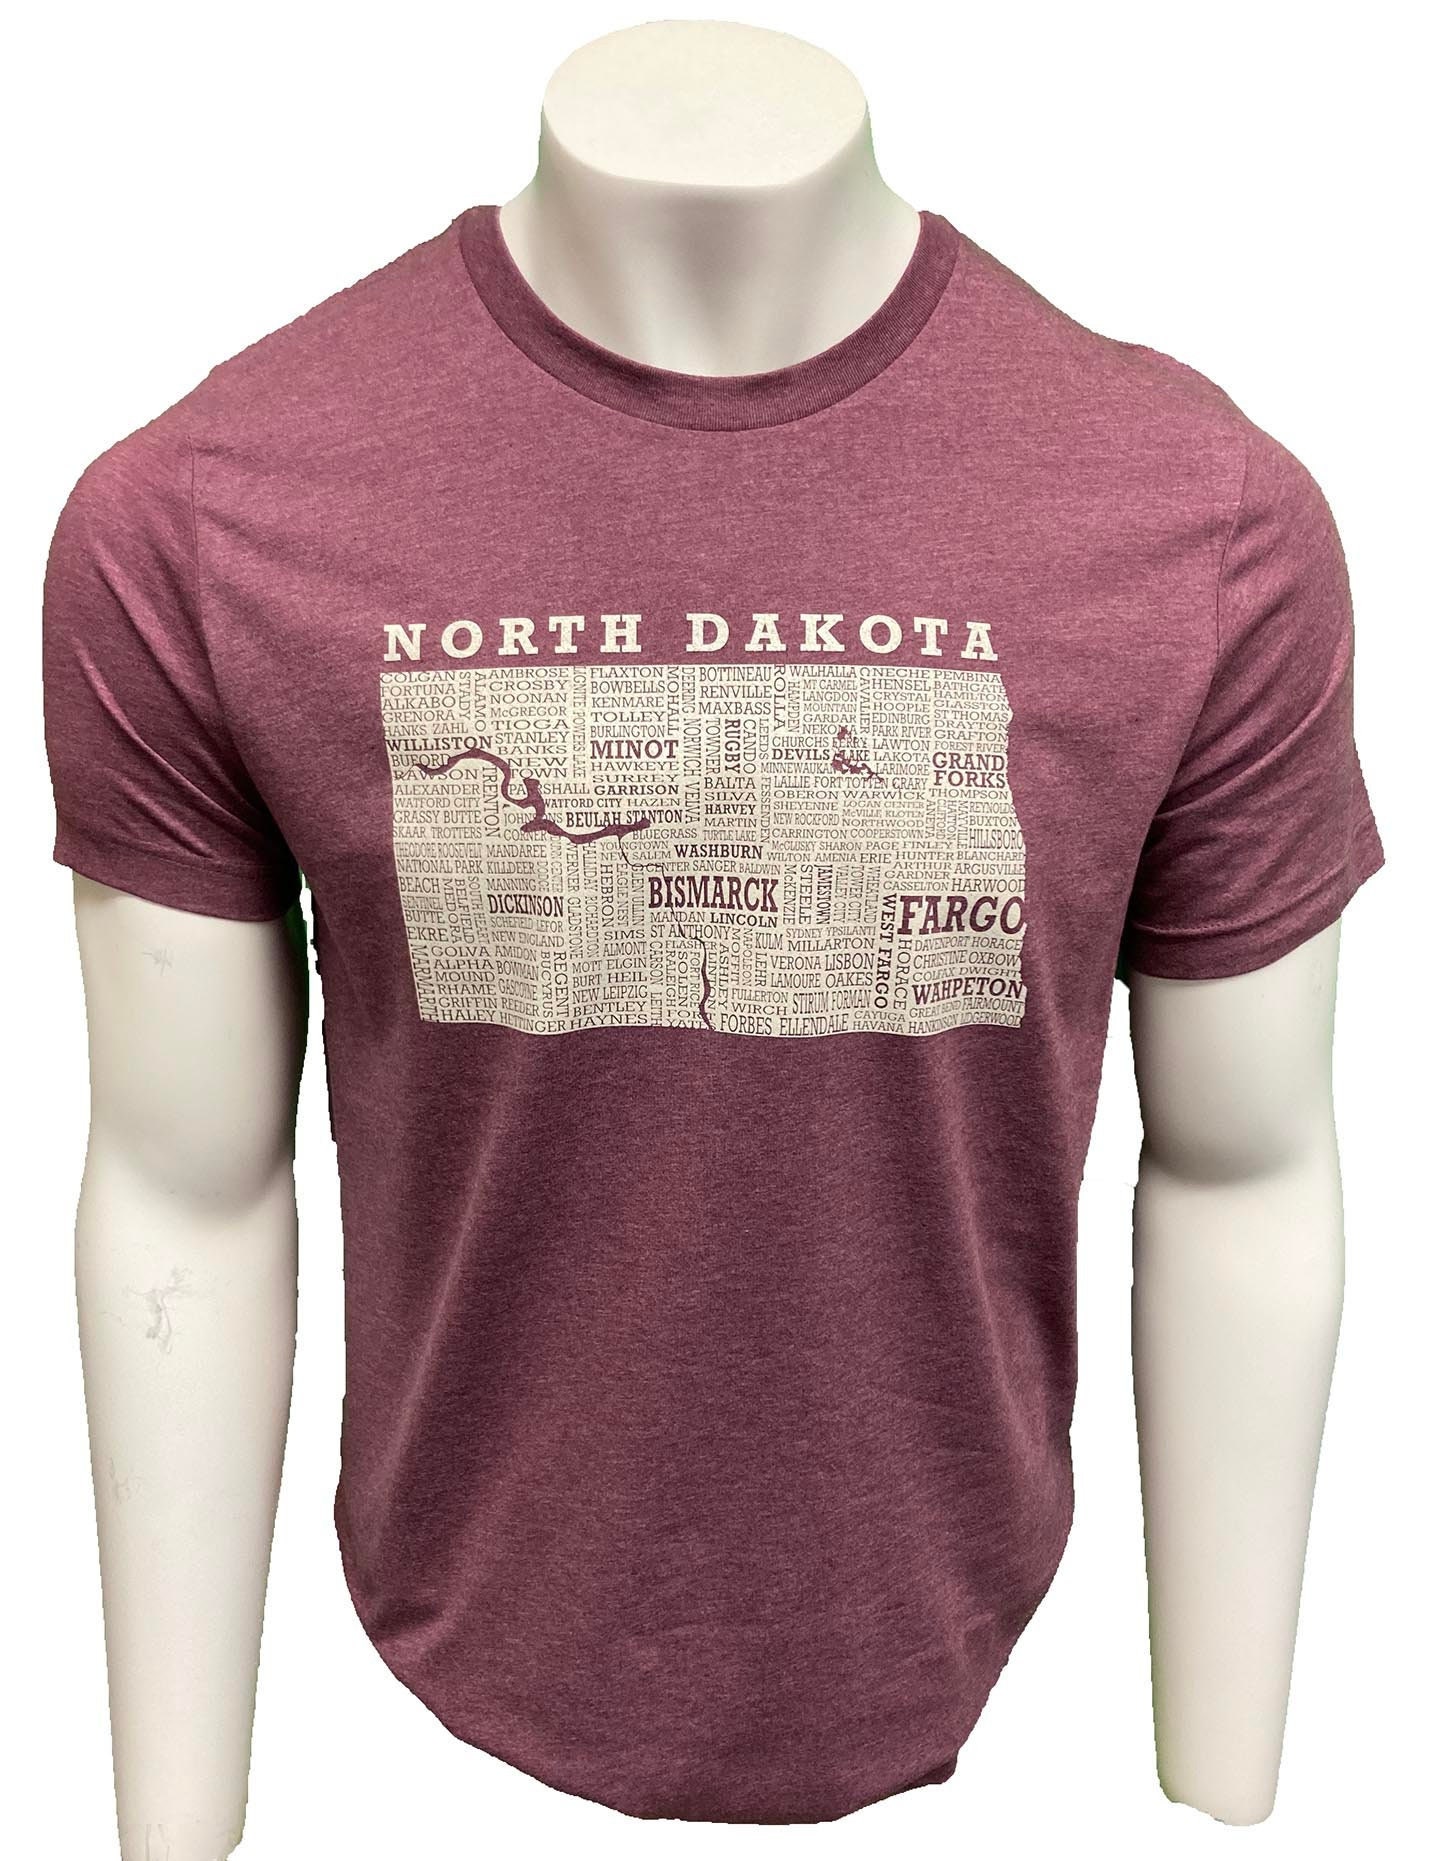 North Dakota Walleye Shirt, Walleye Fish Shirt, North Dakota